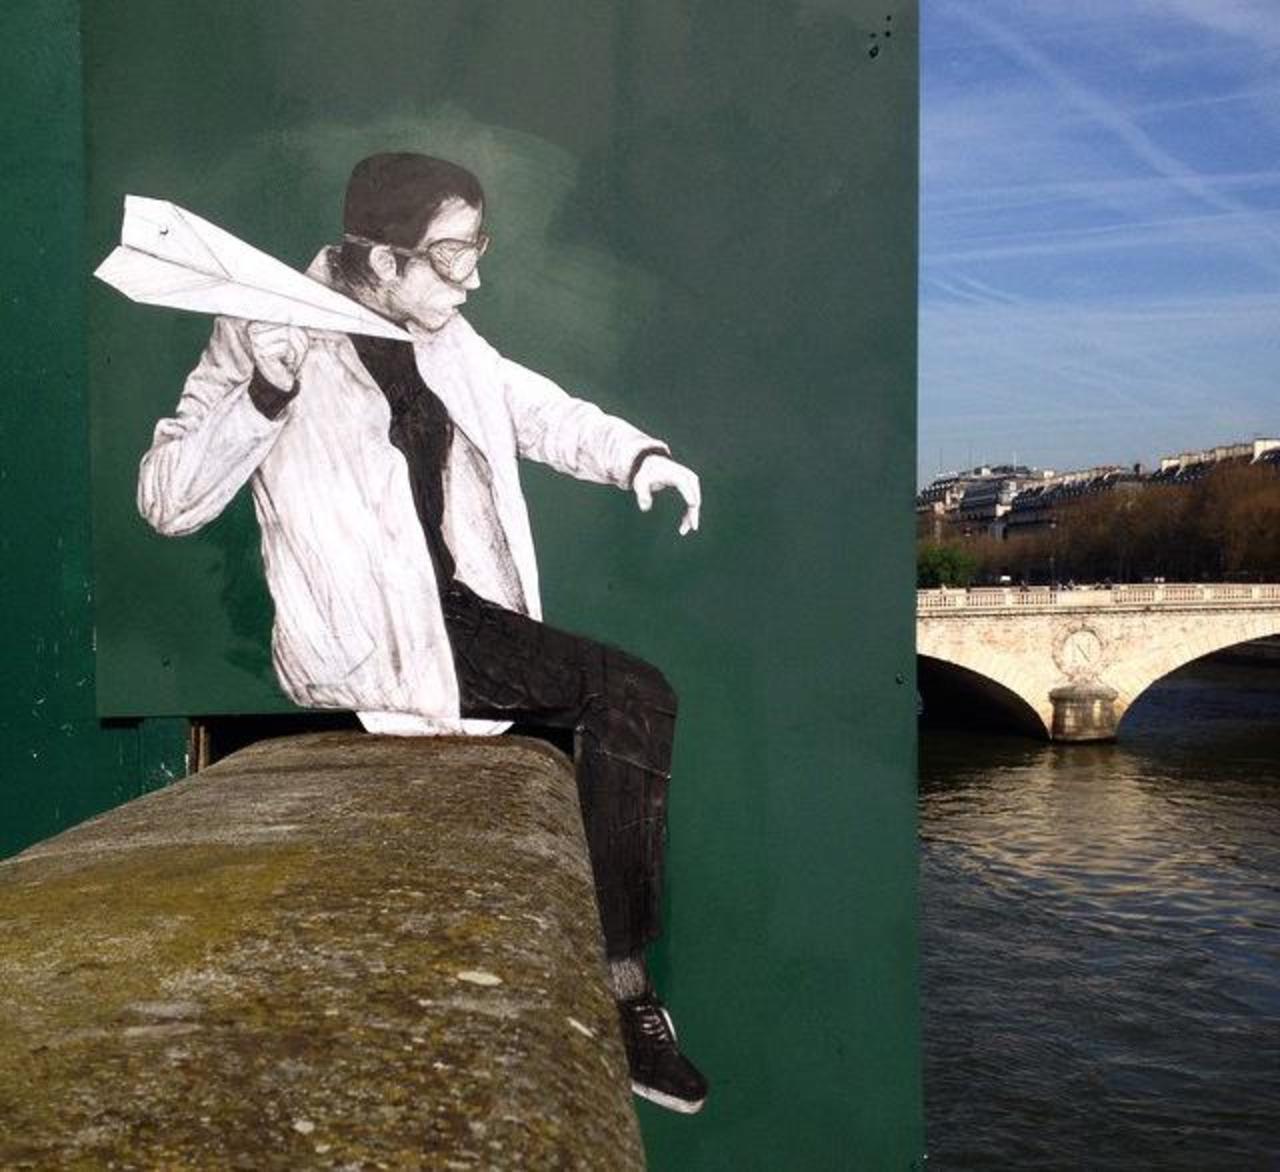 New Street Art by Levalet in Paris

#art #graffiti #arte #streetart http://t.co/ocY958hAOC